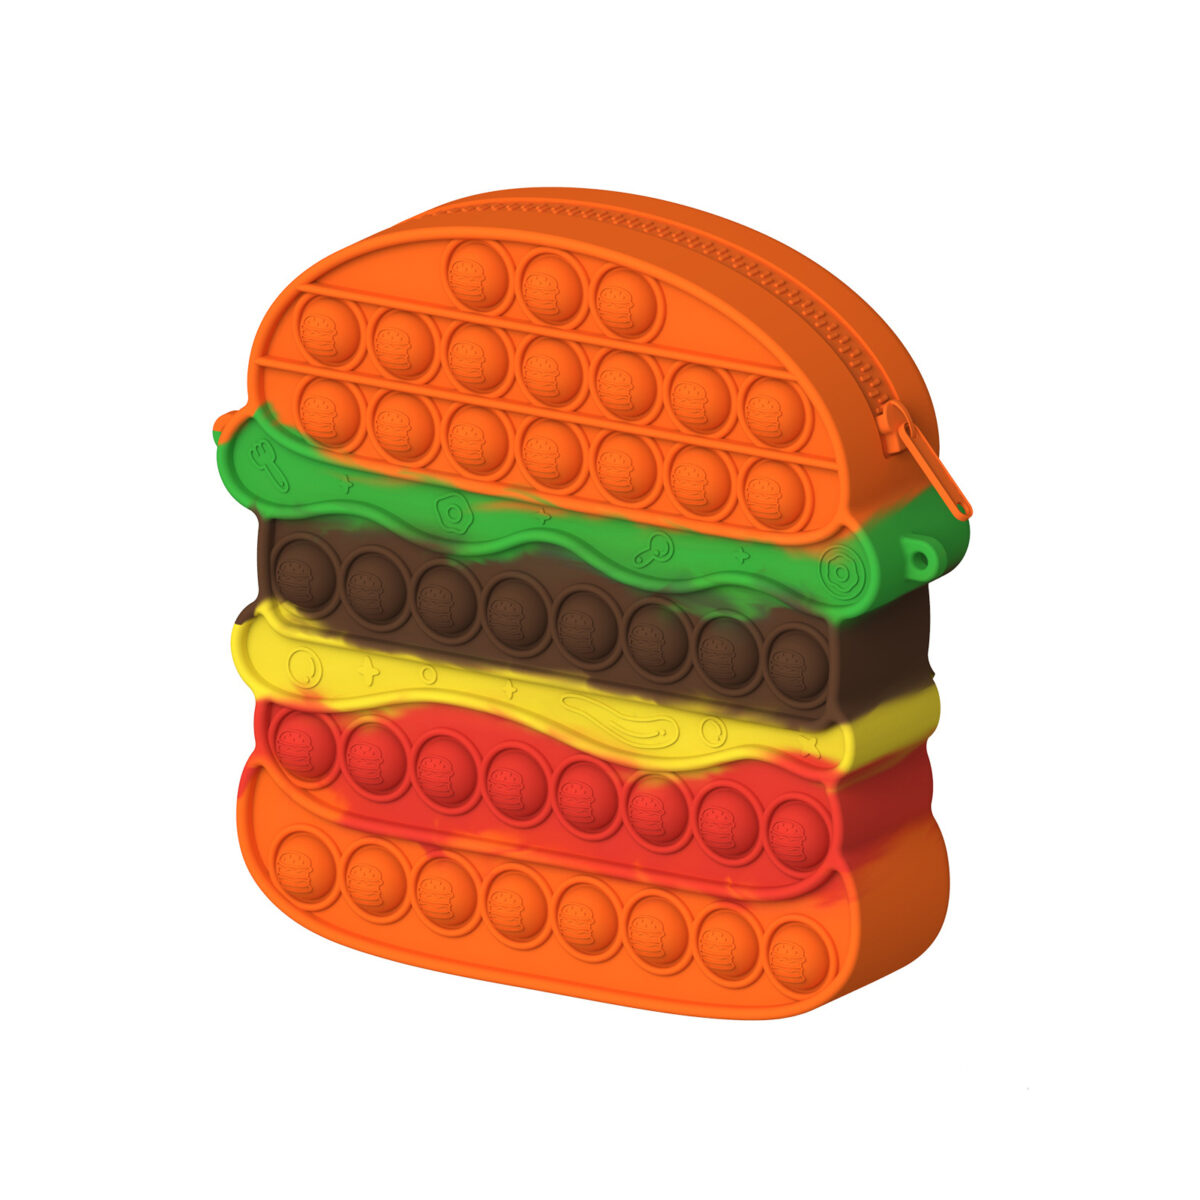 Big Brown Hamburger Pop Its Purse Fidgret Purse Toy With Strap